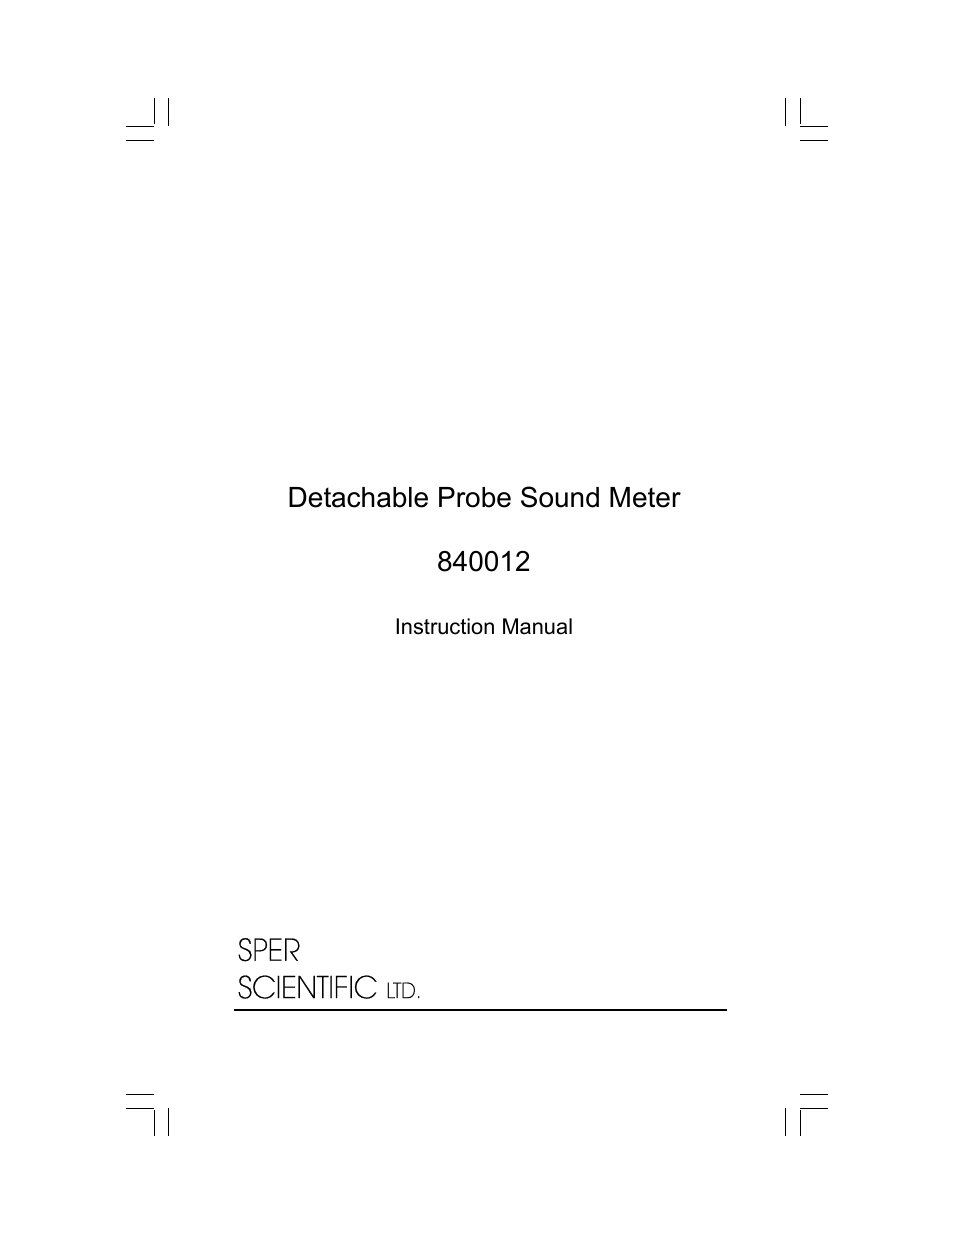 840012 Sound Meter with Detachable Probe